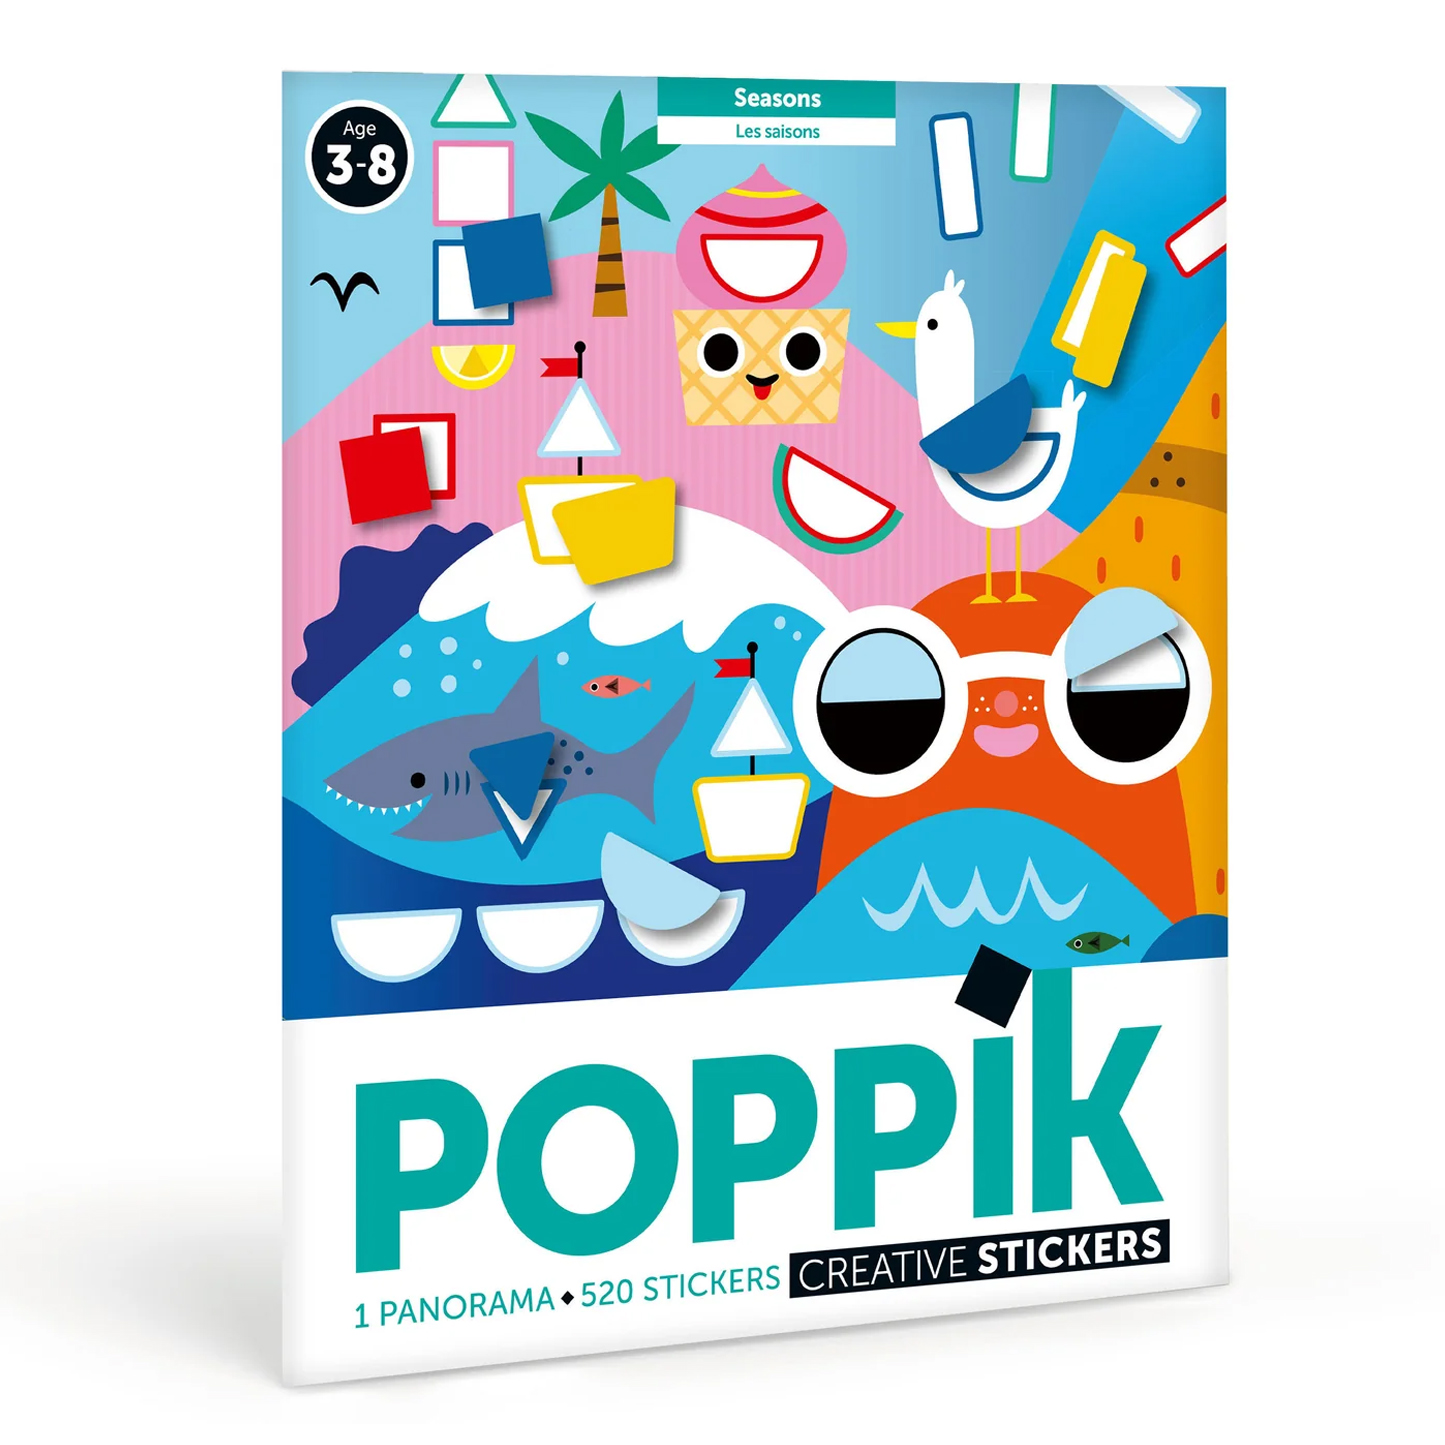  Poppik Panorama Sticker Poster - Seasons